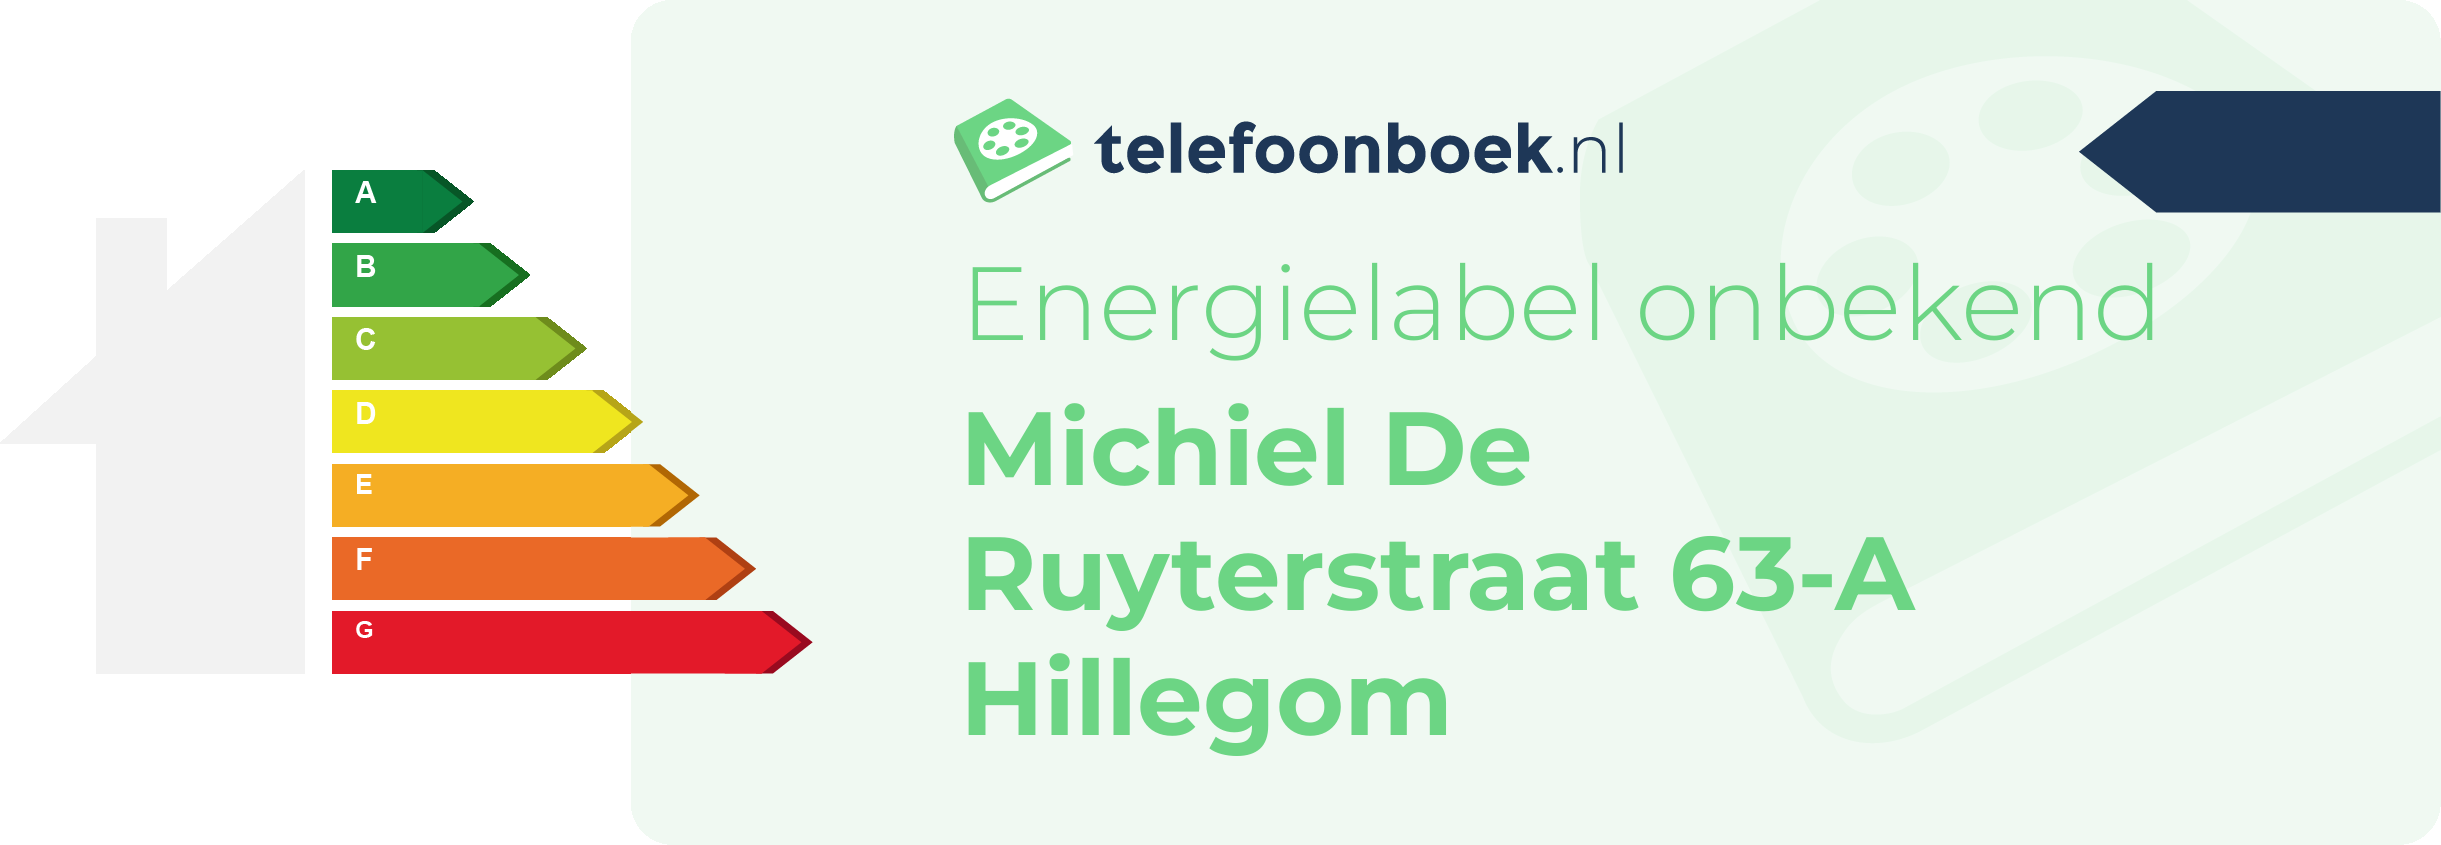 Energielabel Michiel De Ruyterstraat 63-A Hillegom